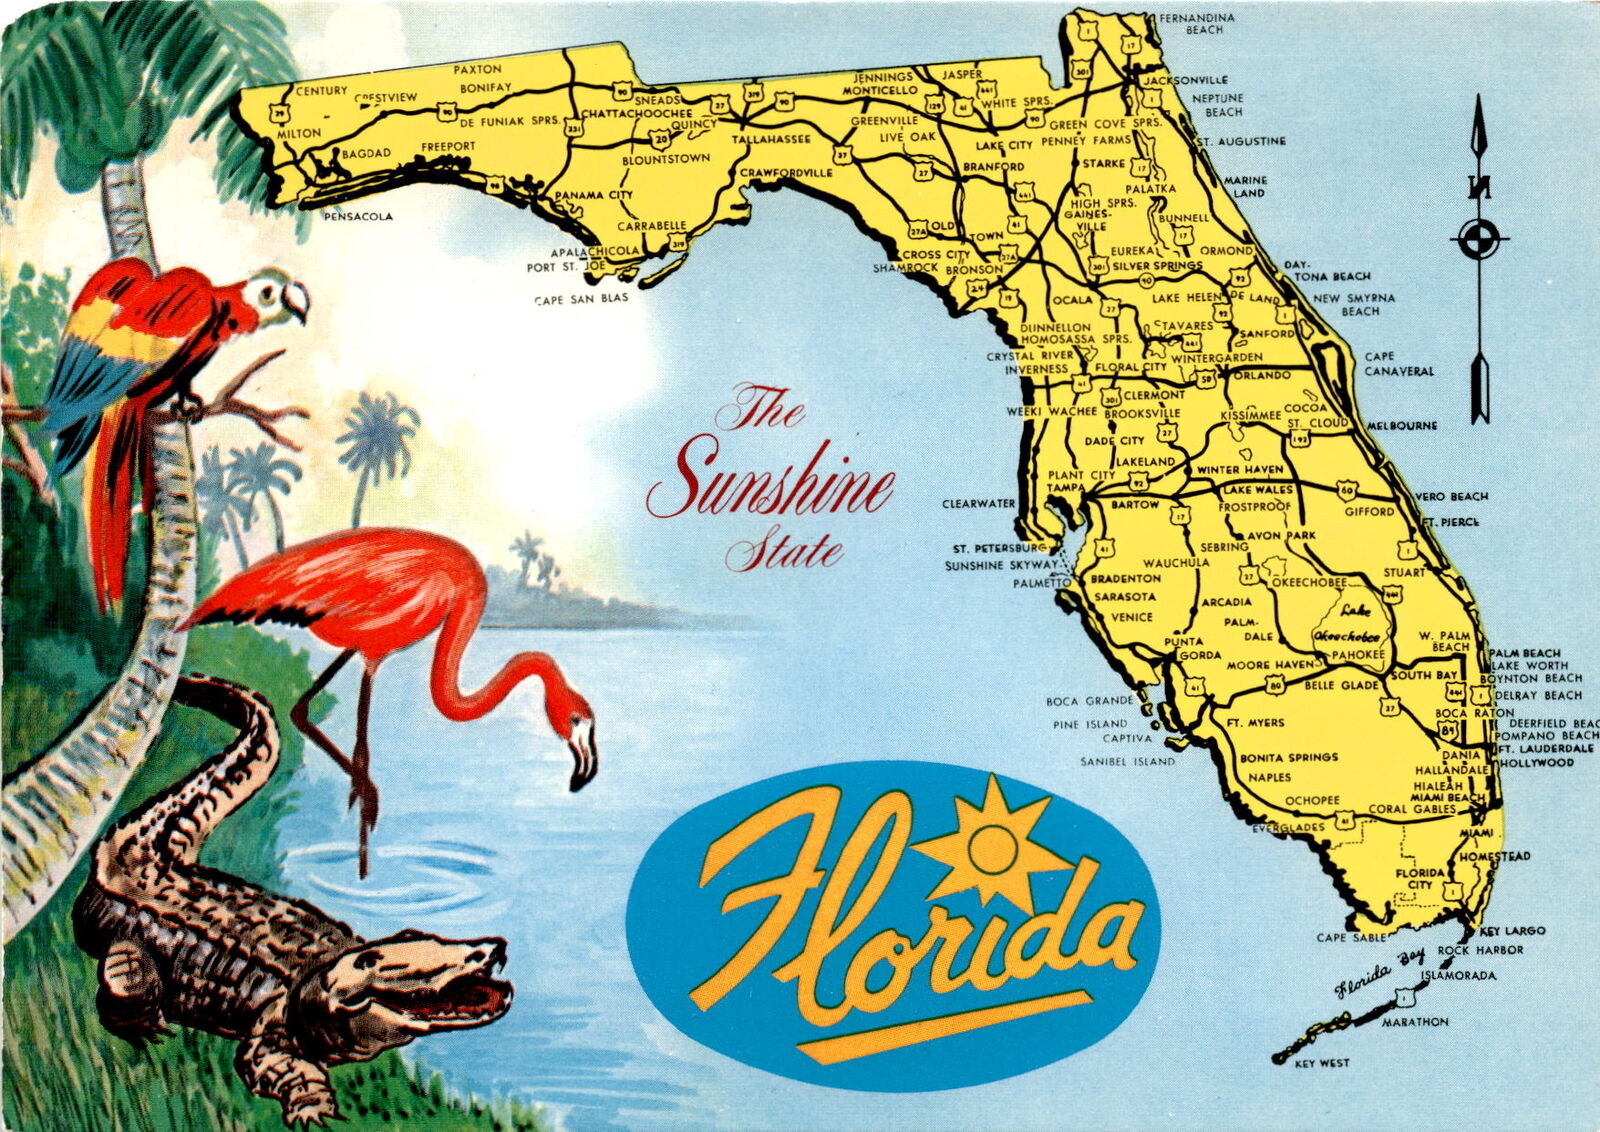 Florida, Fernandina Beach, Jacksonville, St. Augustine, Tallahassee, Postcard